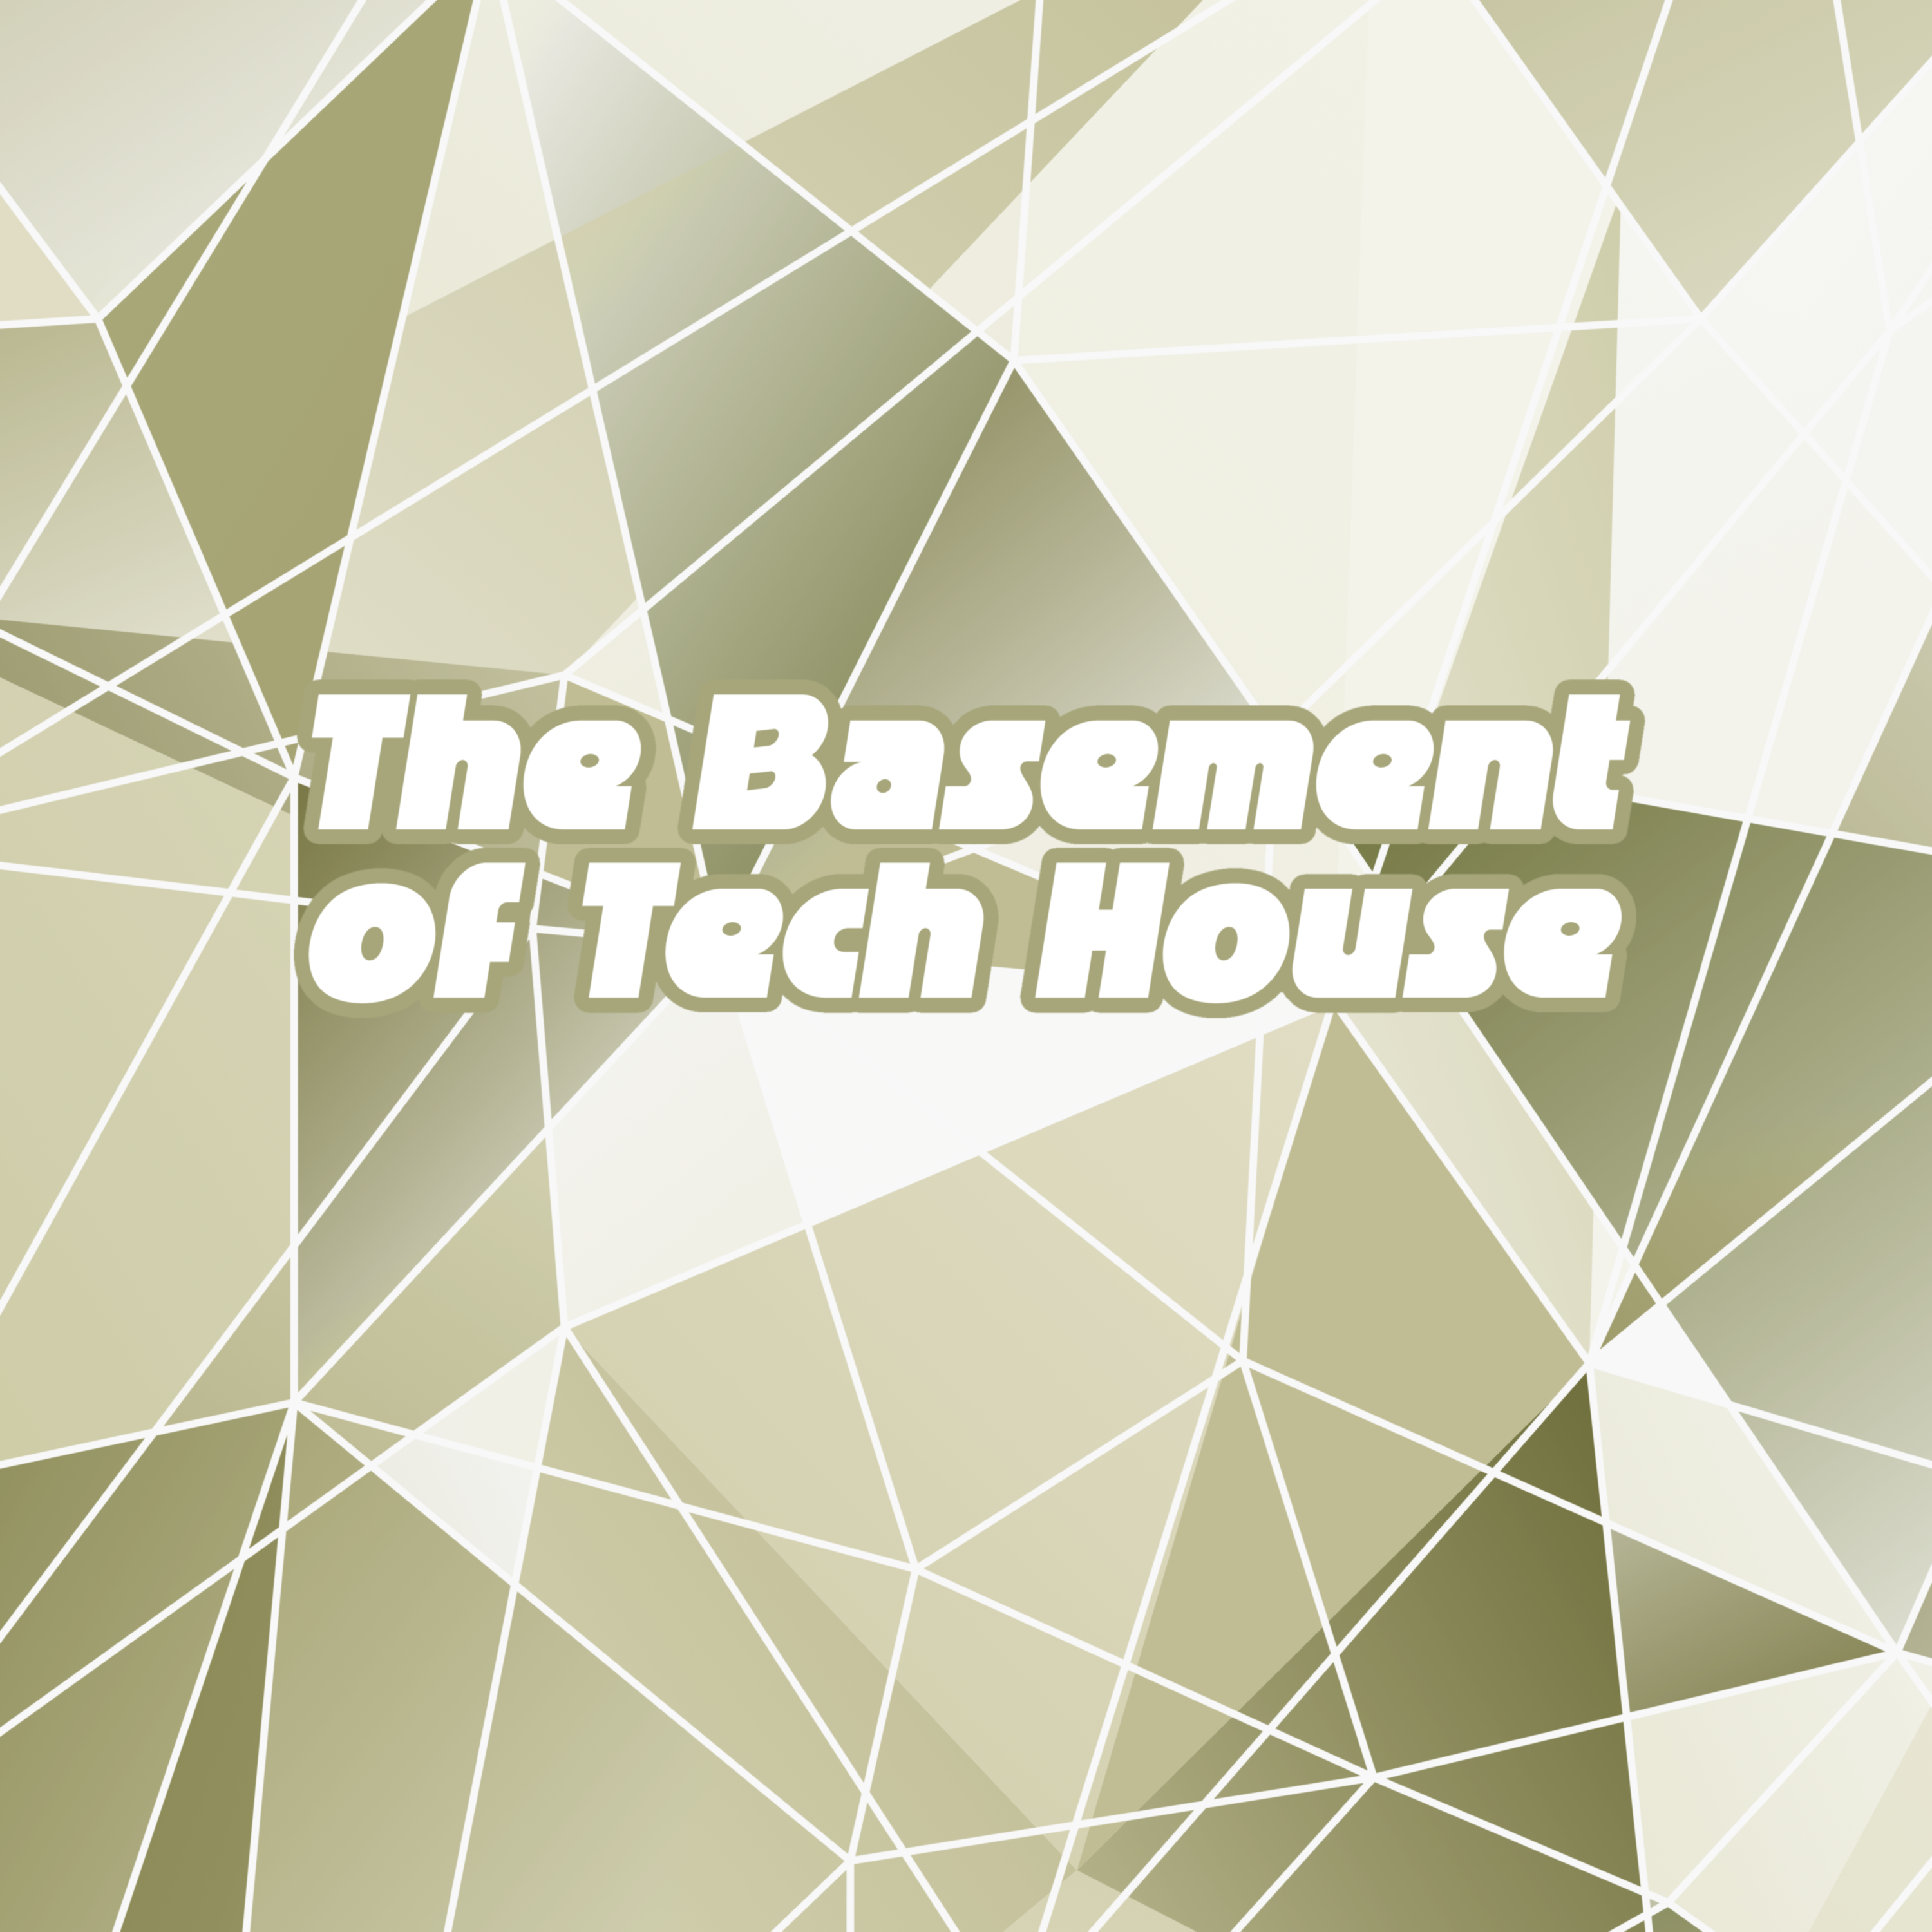 The Basement of Tech House